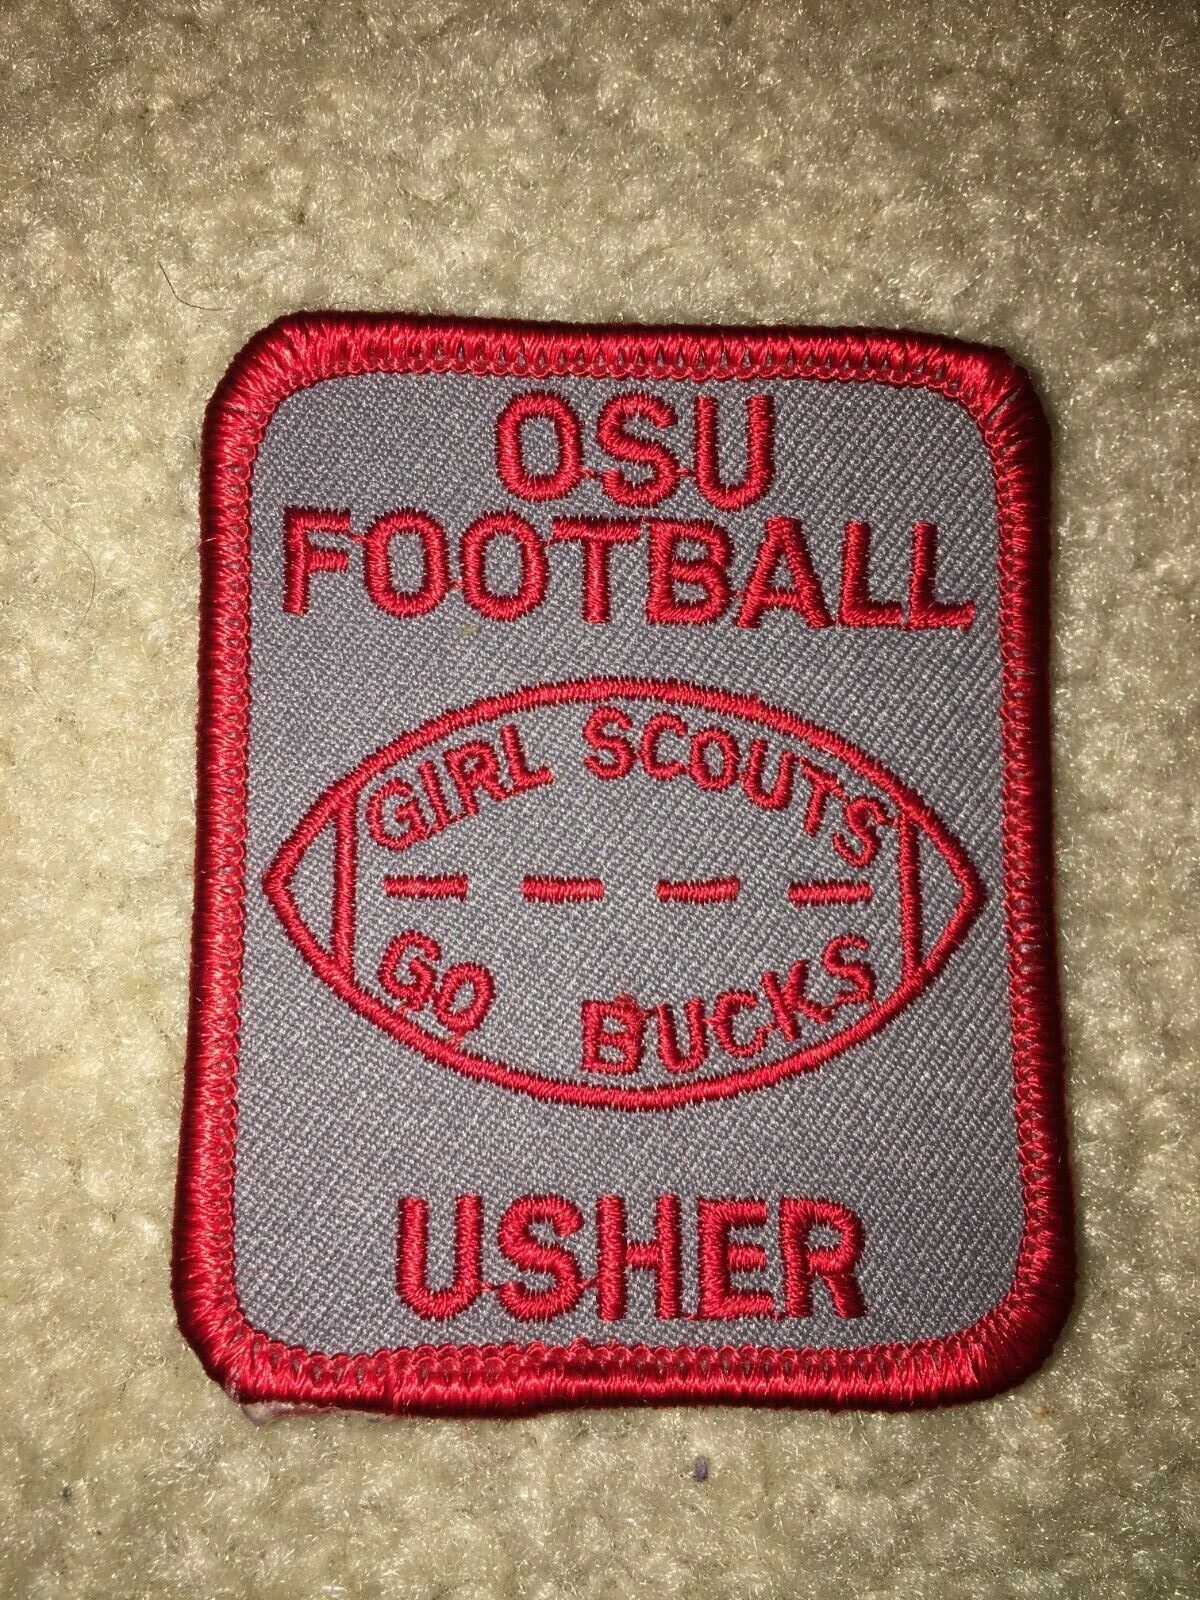 Boy Girl Scout Ohio State Usher Football Bucks Buckeye University Sport Patch